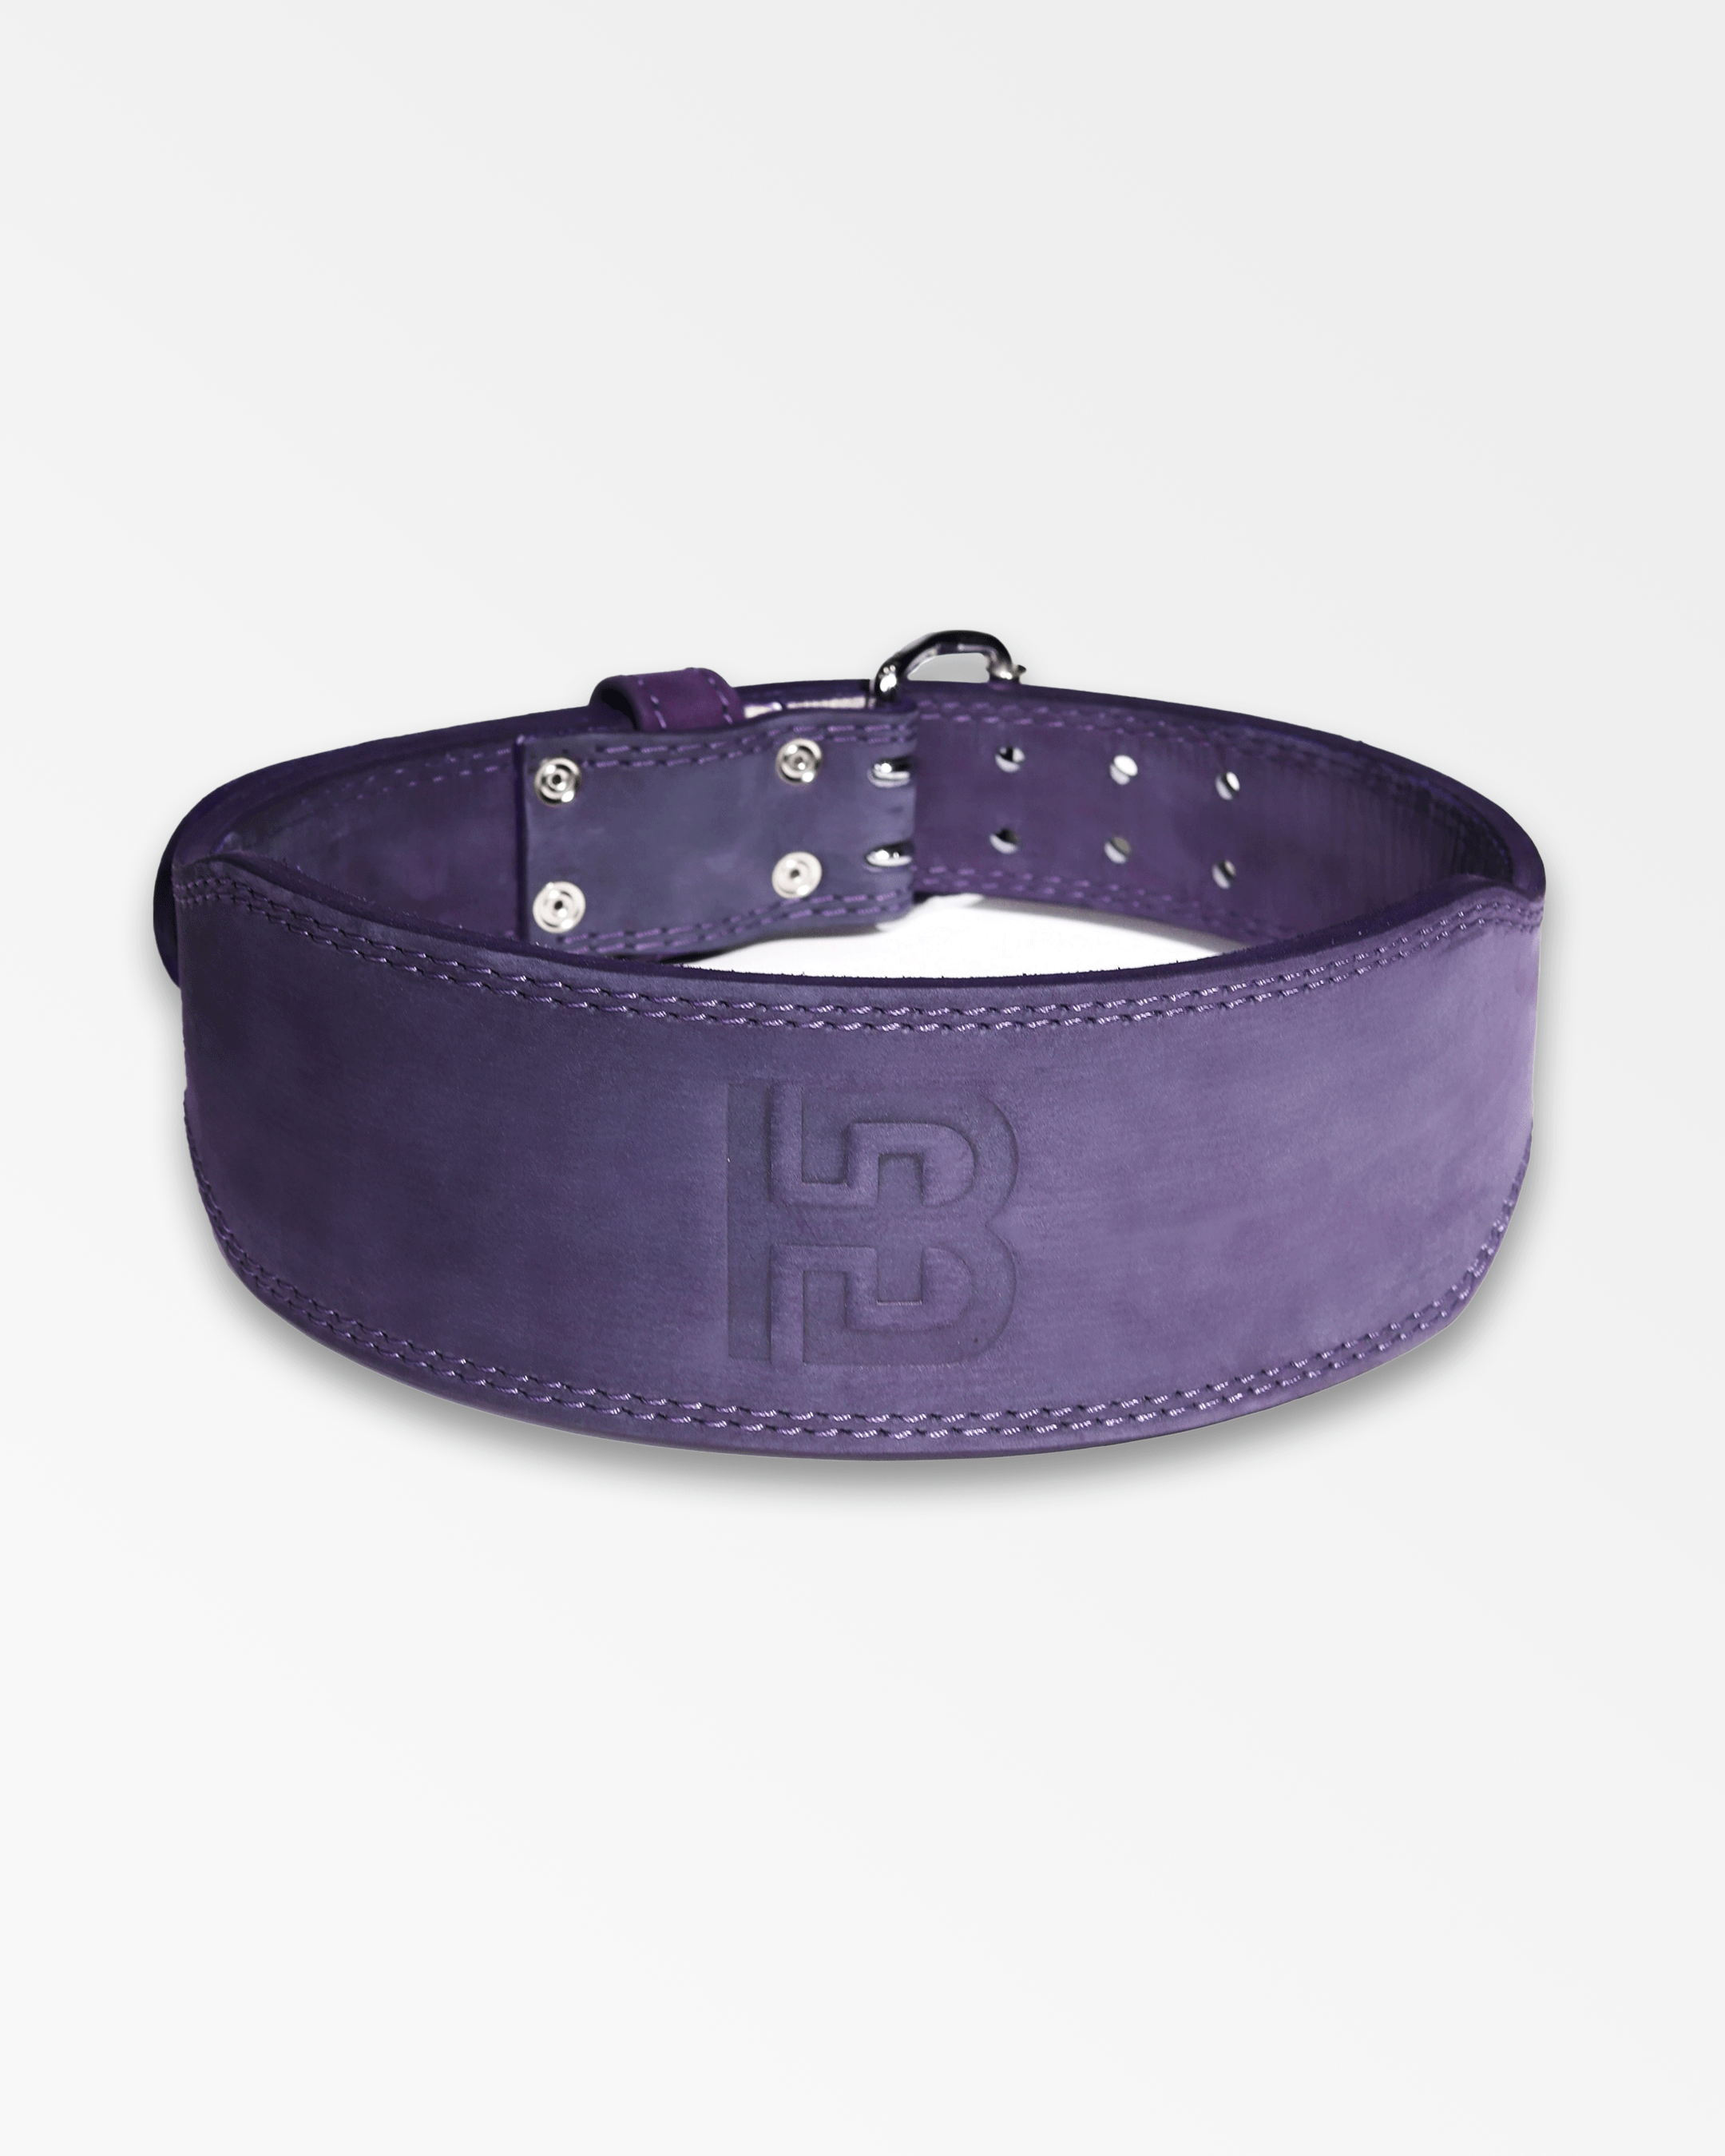 Anime Lever Belt, Purple Design Weight Lifting Belt B, Heavy Duty